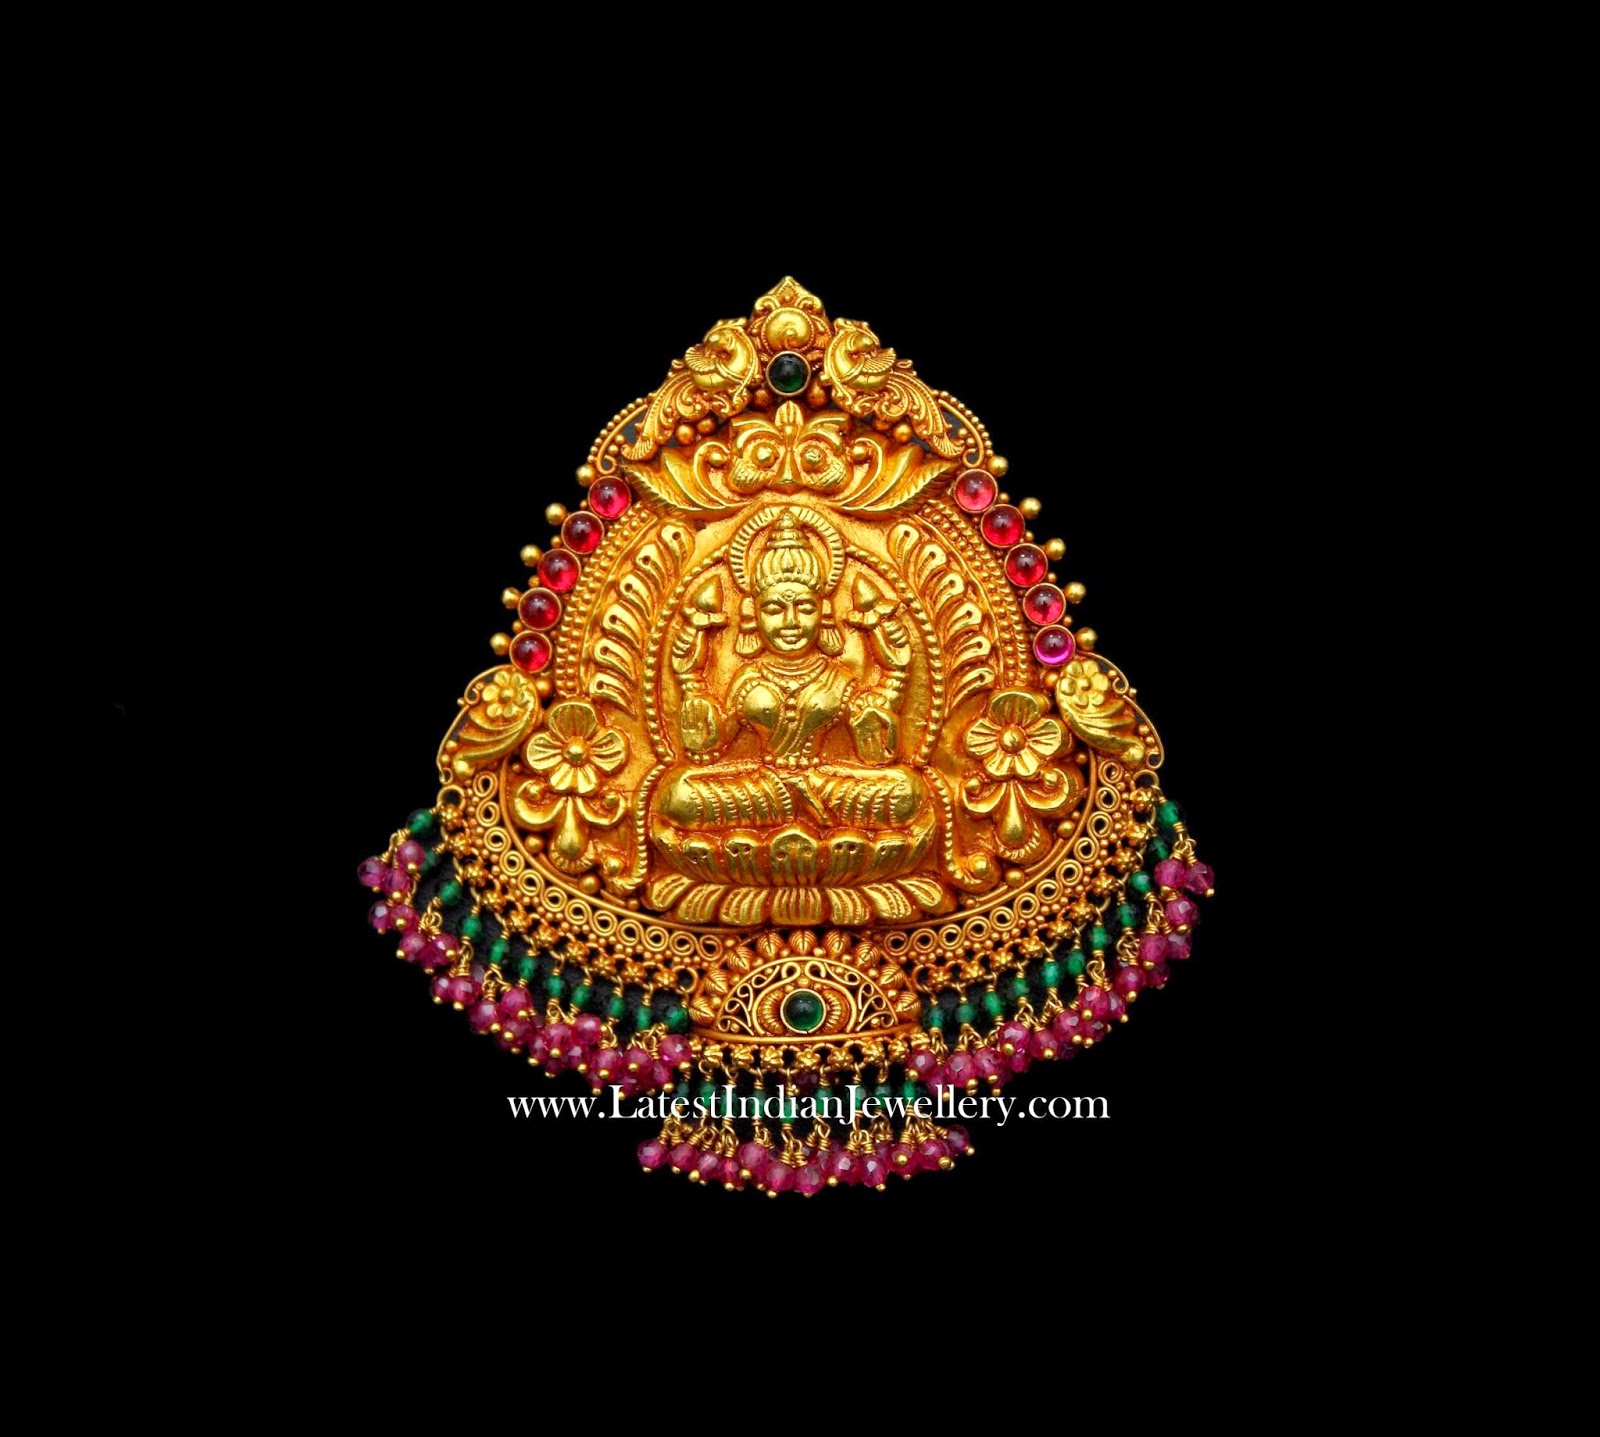 Lakshmi Pendant in 22k Gold - Latest Indian Jewellery Designs